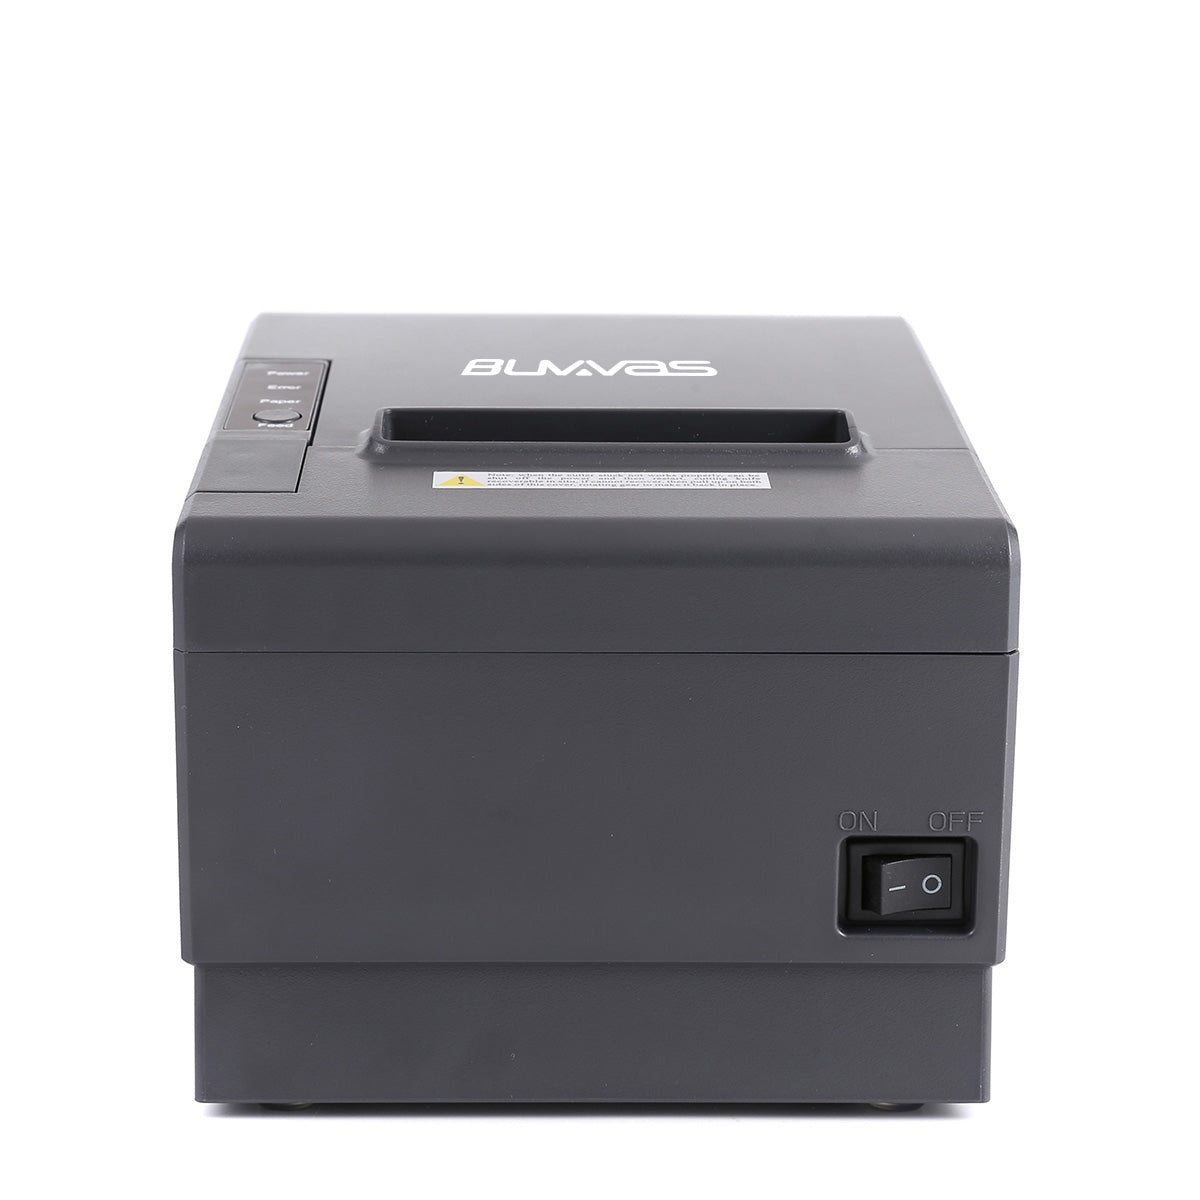 Buvvas HS-802 Thermal Receipt Printer